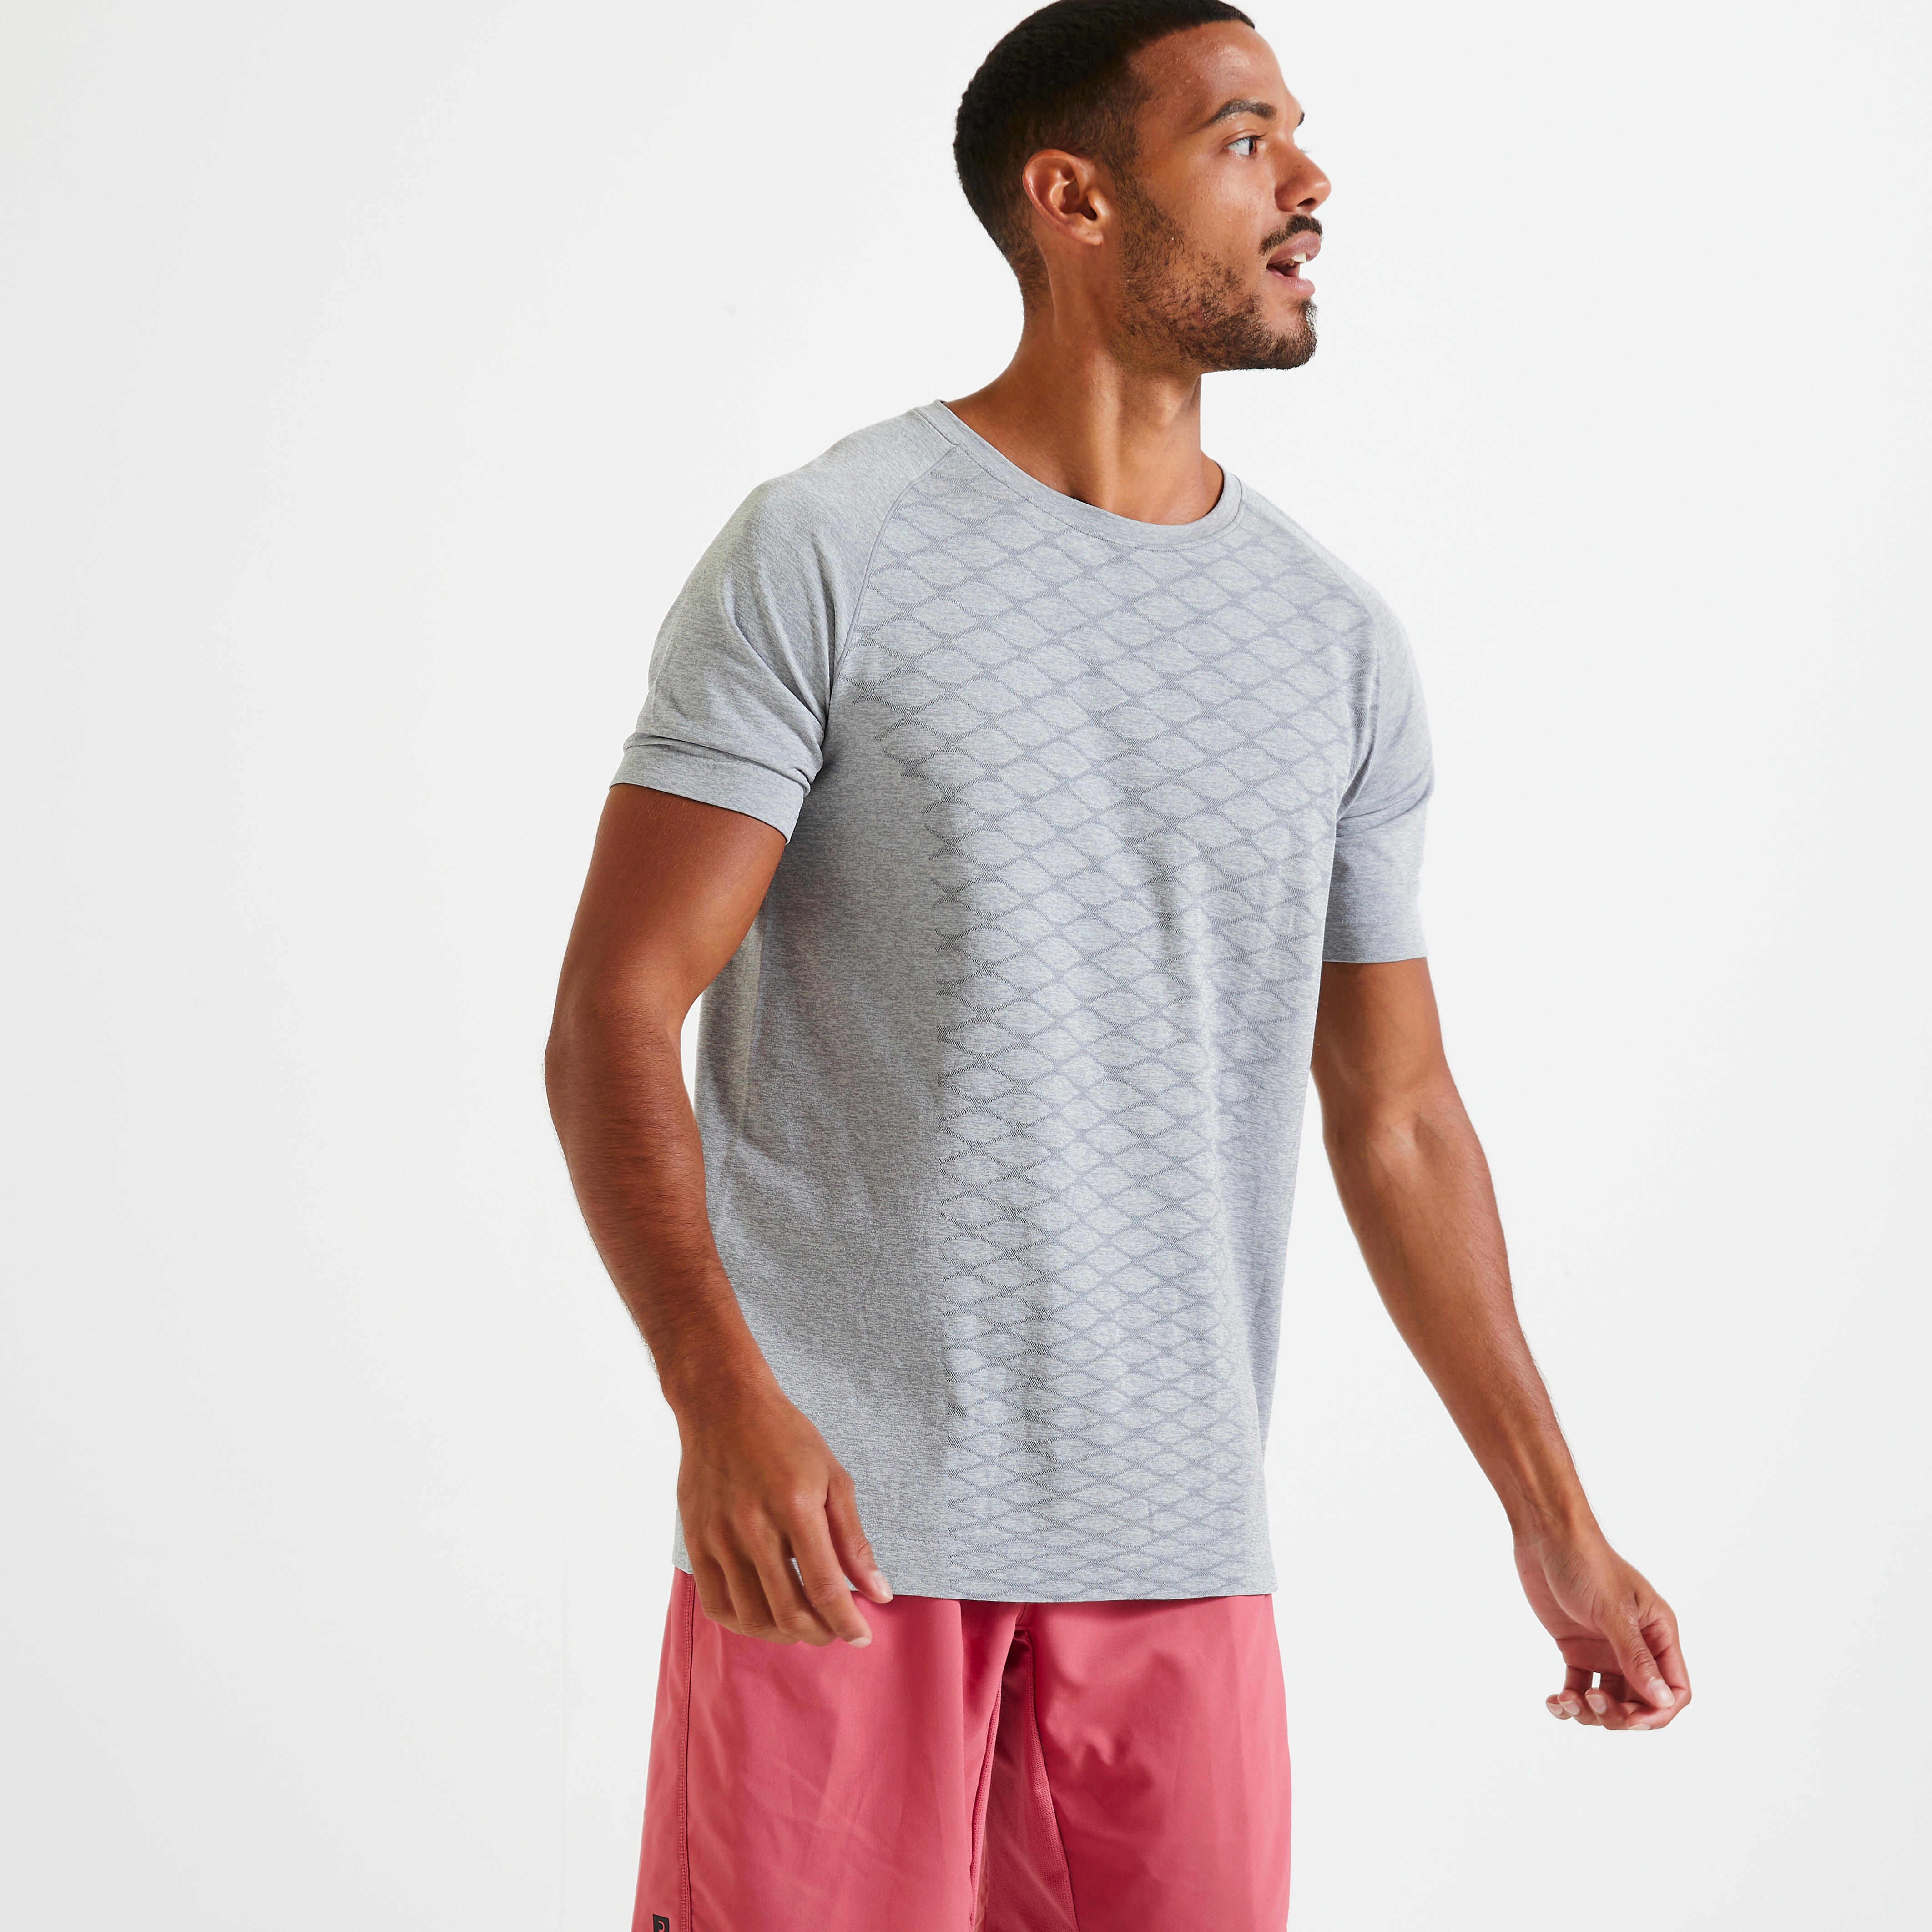 Men's Seamless Workout Clothes & Activewear